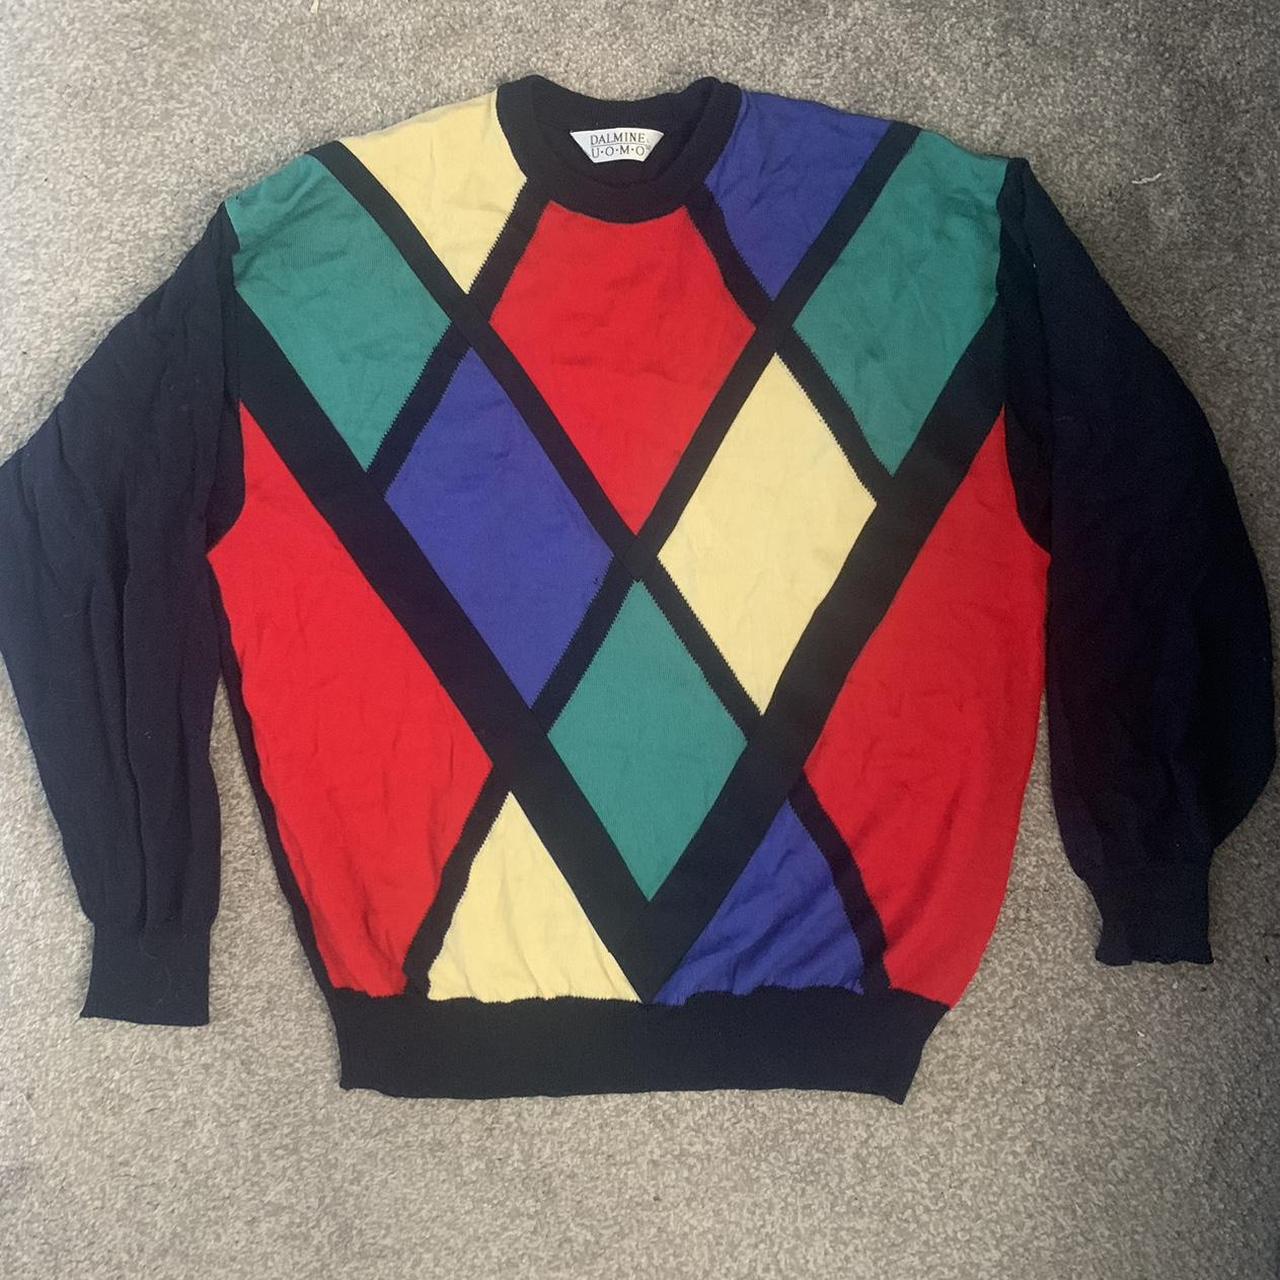 Vintage Dalmine Uomo Jumper/Sweater Size large Great... - Depop